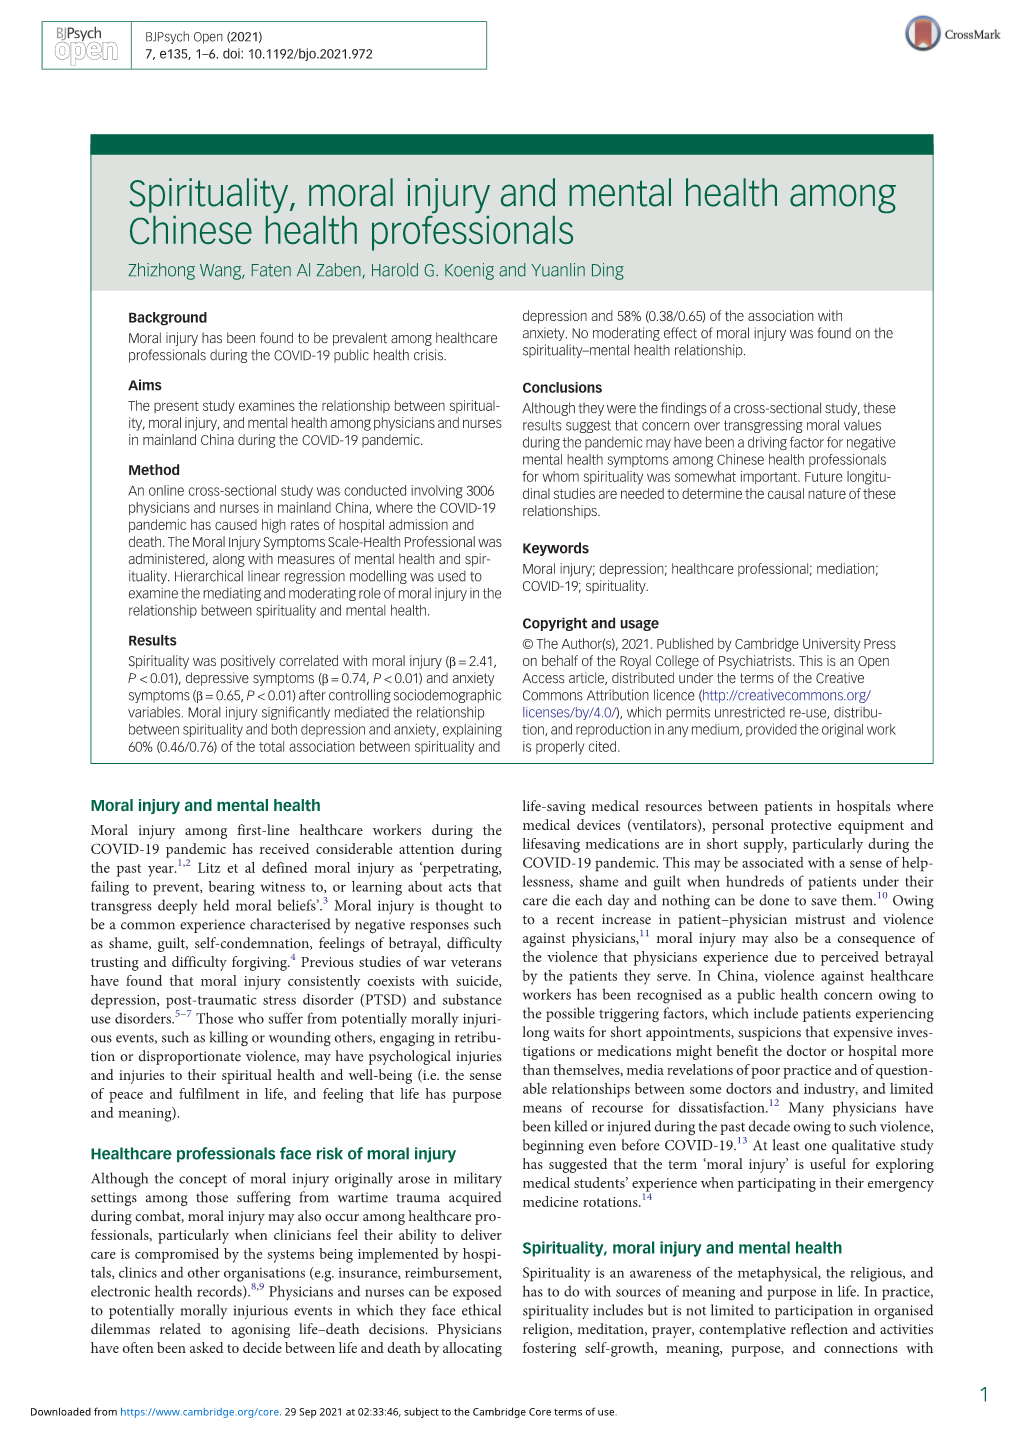 Spirituality, Moral Injury and Mental Health Among Chinese Health Professionals Zhizhong Wang, Faten Al Zaben, Harold G